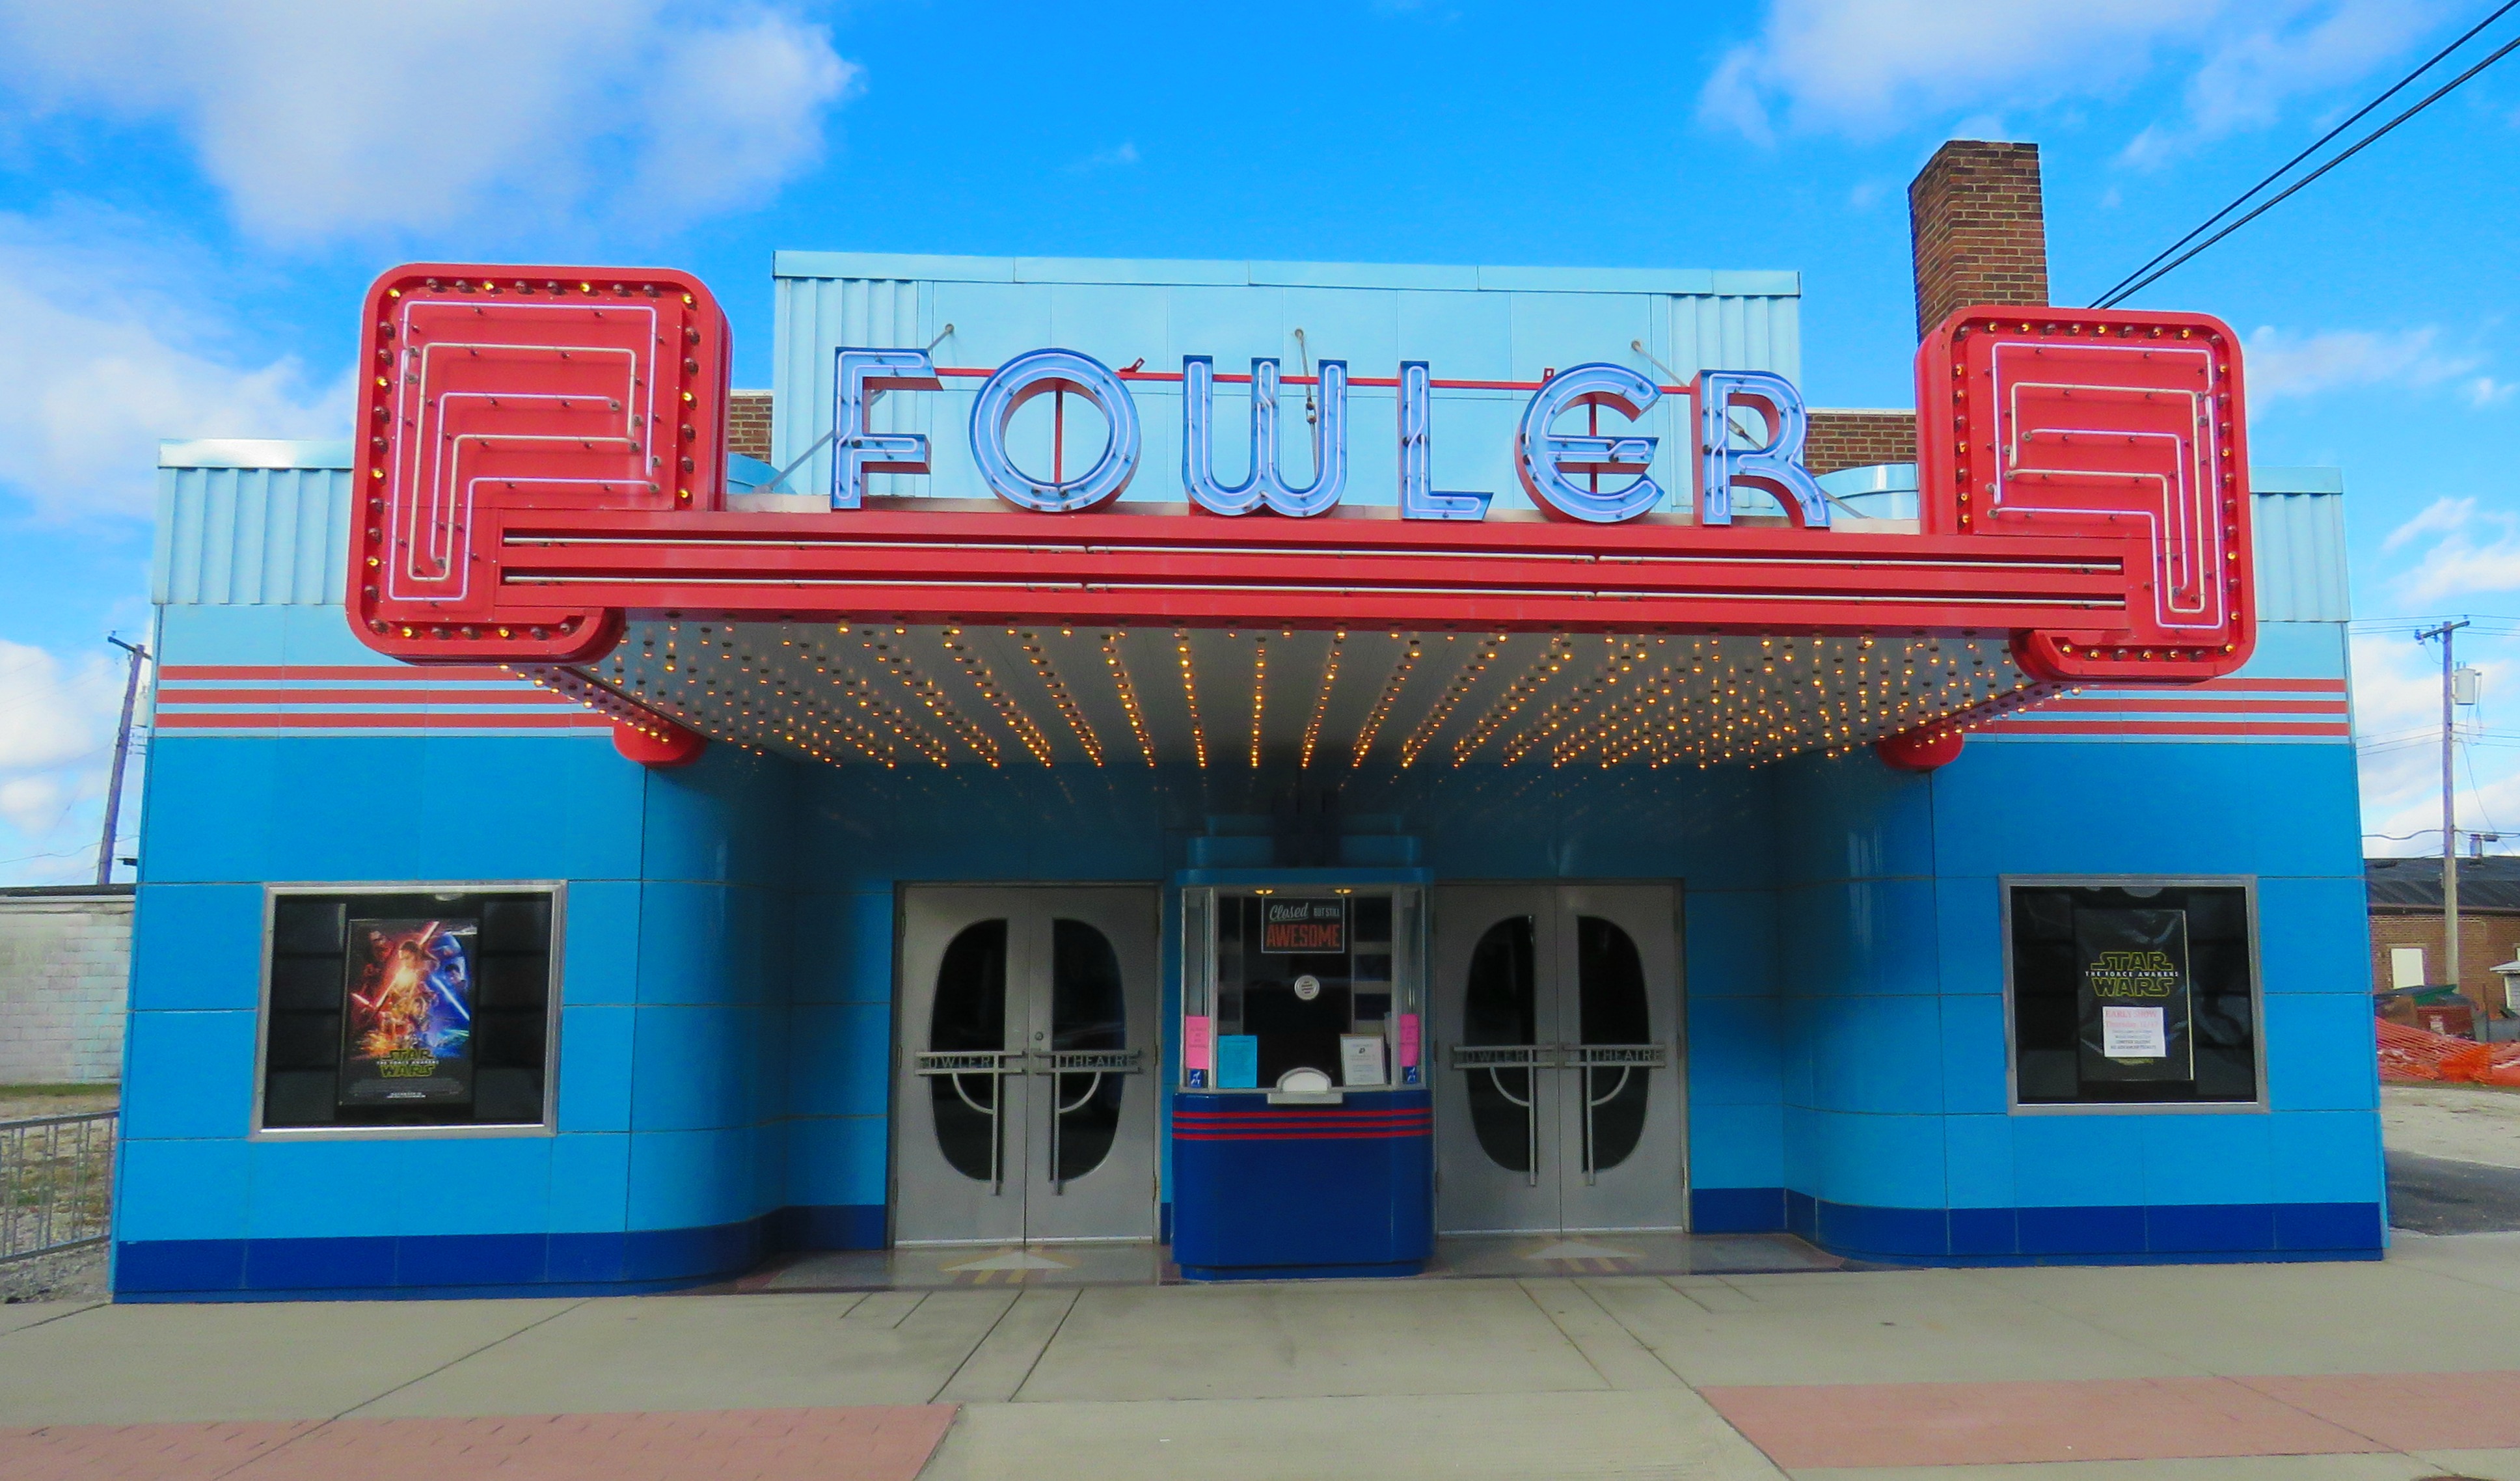 Fowler Theatre - 111 East 5th Street, Fowler, Indiana U.S.A. - December 18, 2015